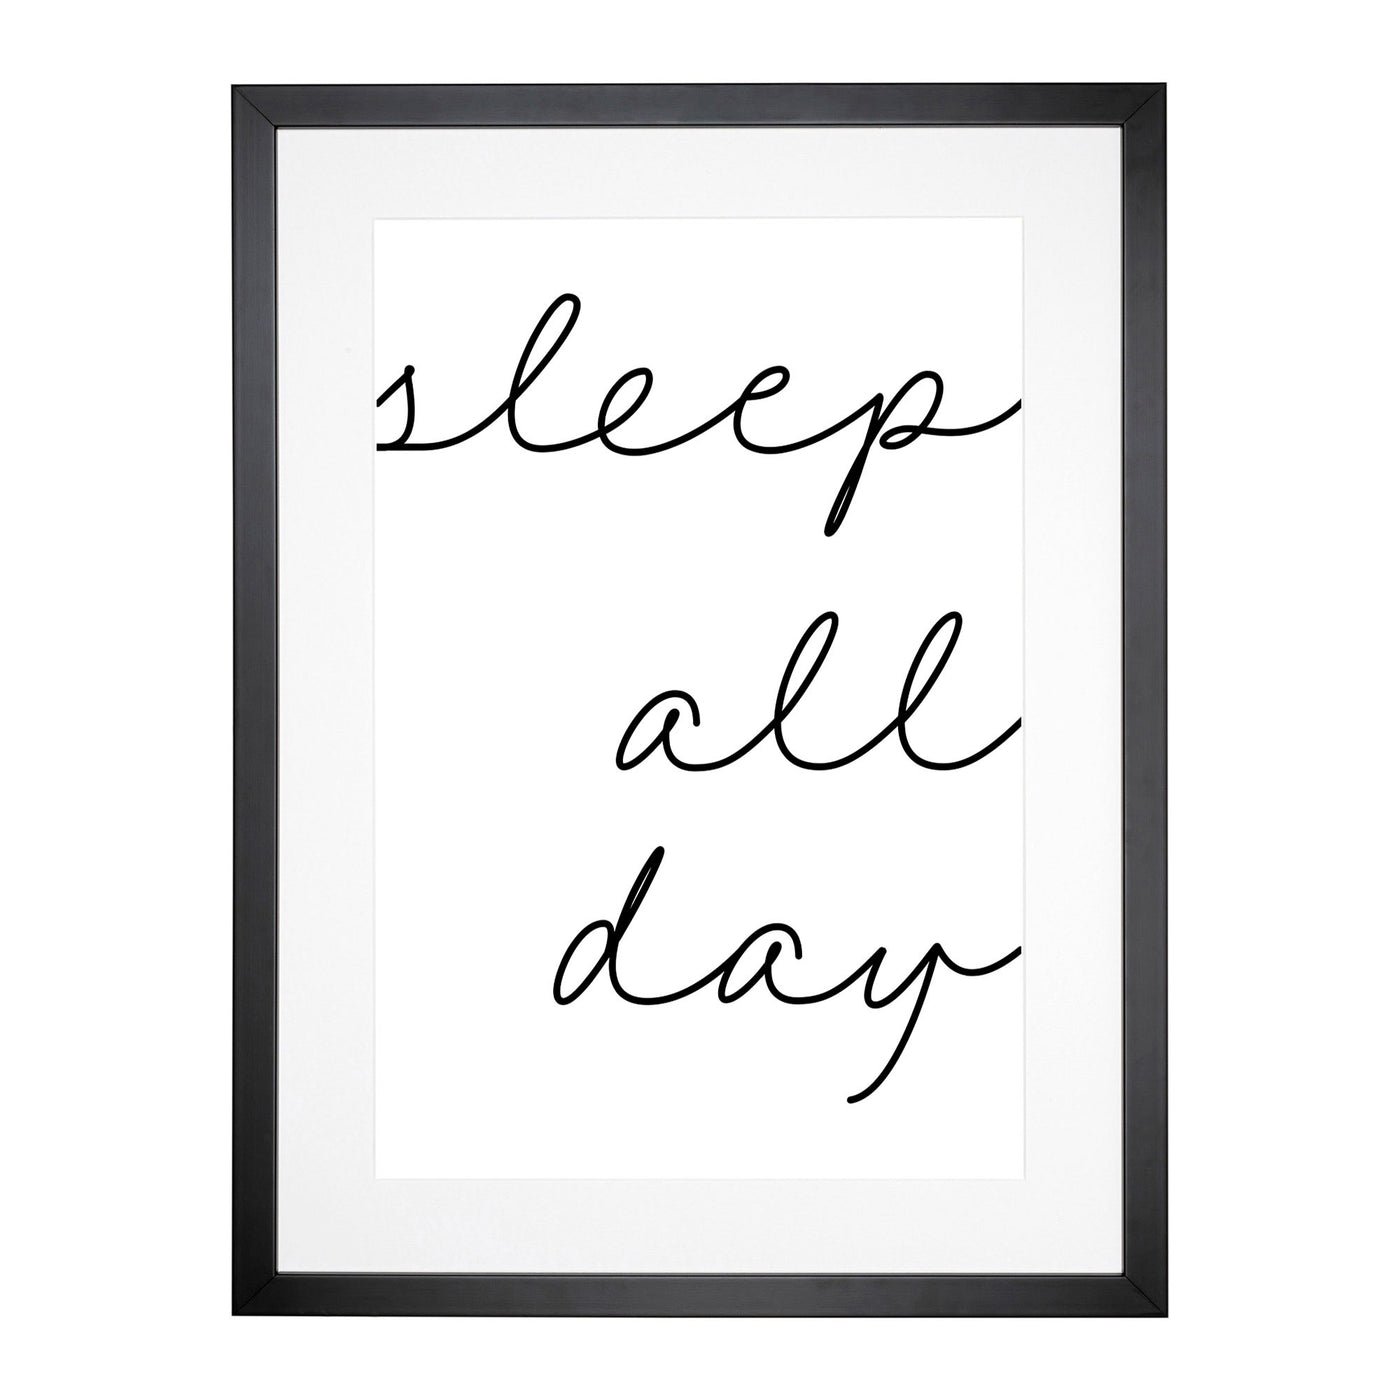 Sleep All Day Typography Framed Print Main Image